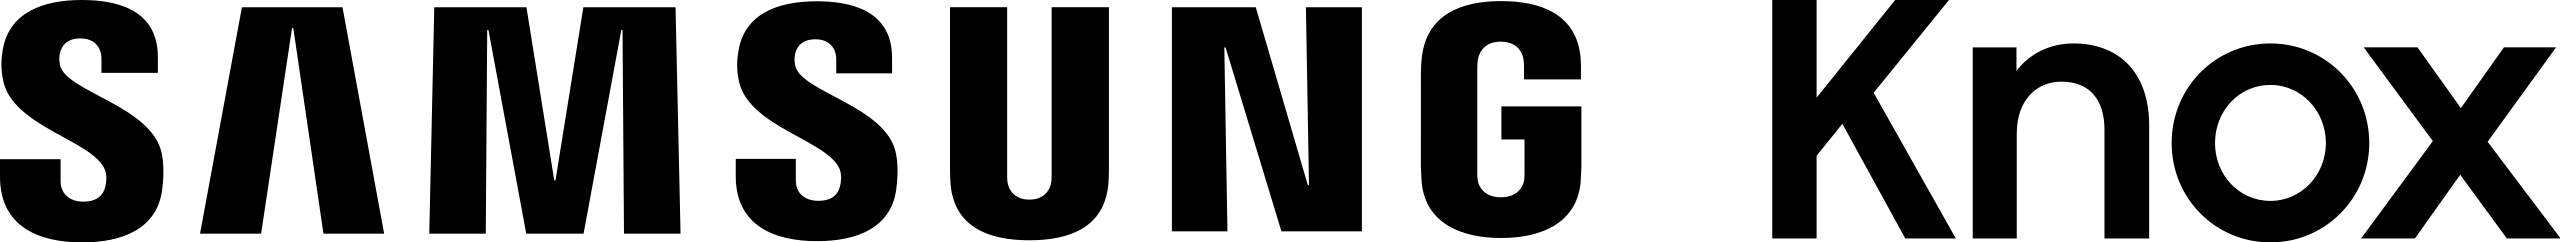 Samsung_Knox_logo.svg